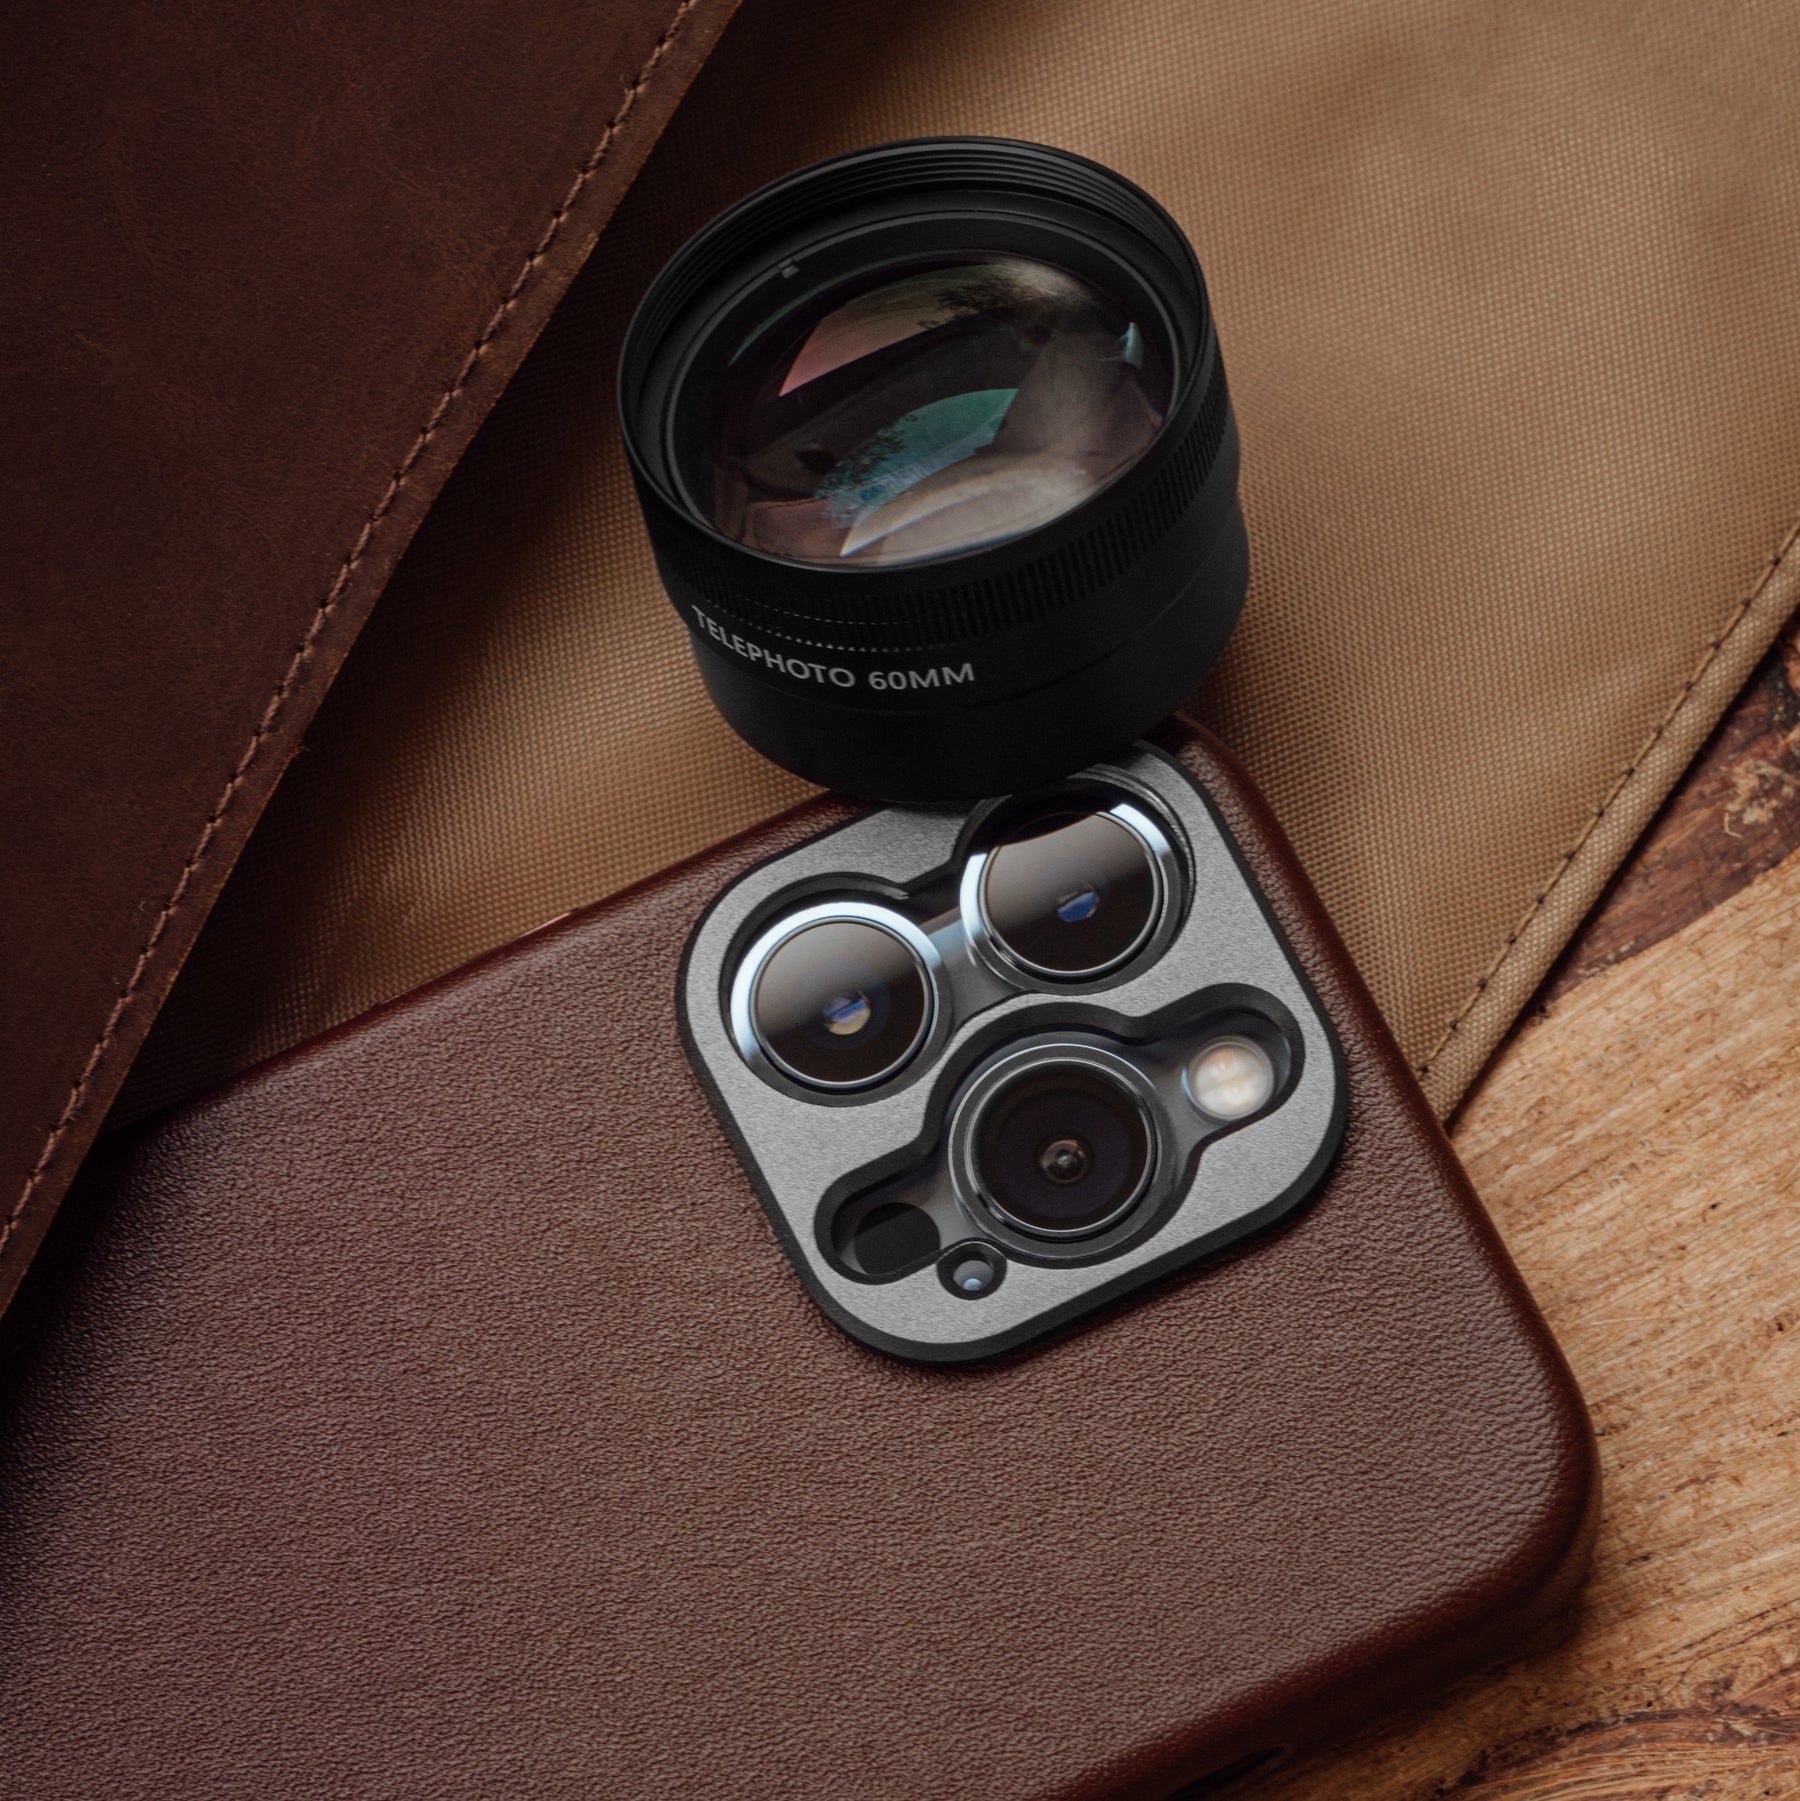 iPhone 14 Pro Max Lens - SANDMARC